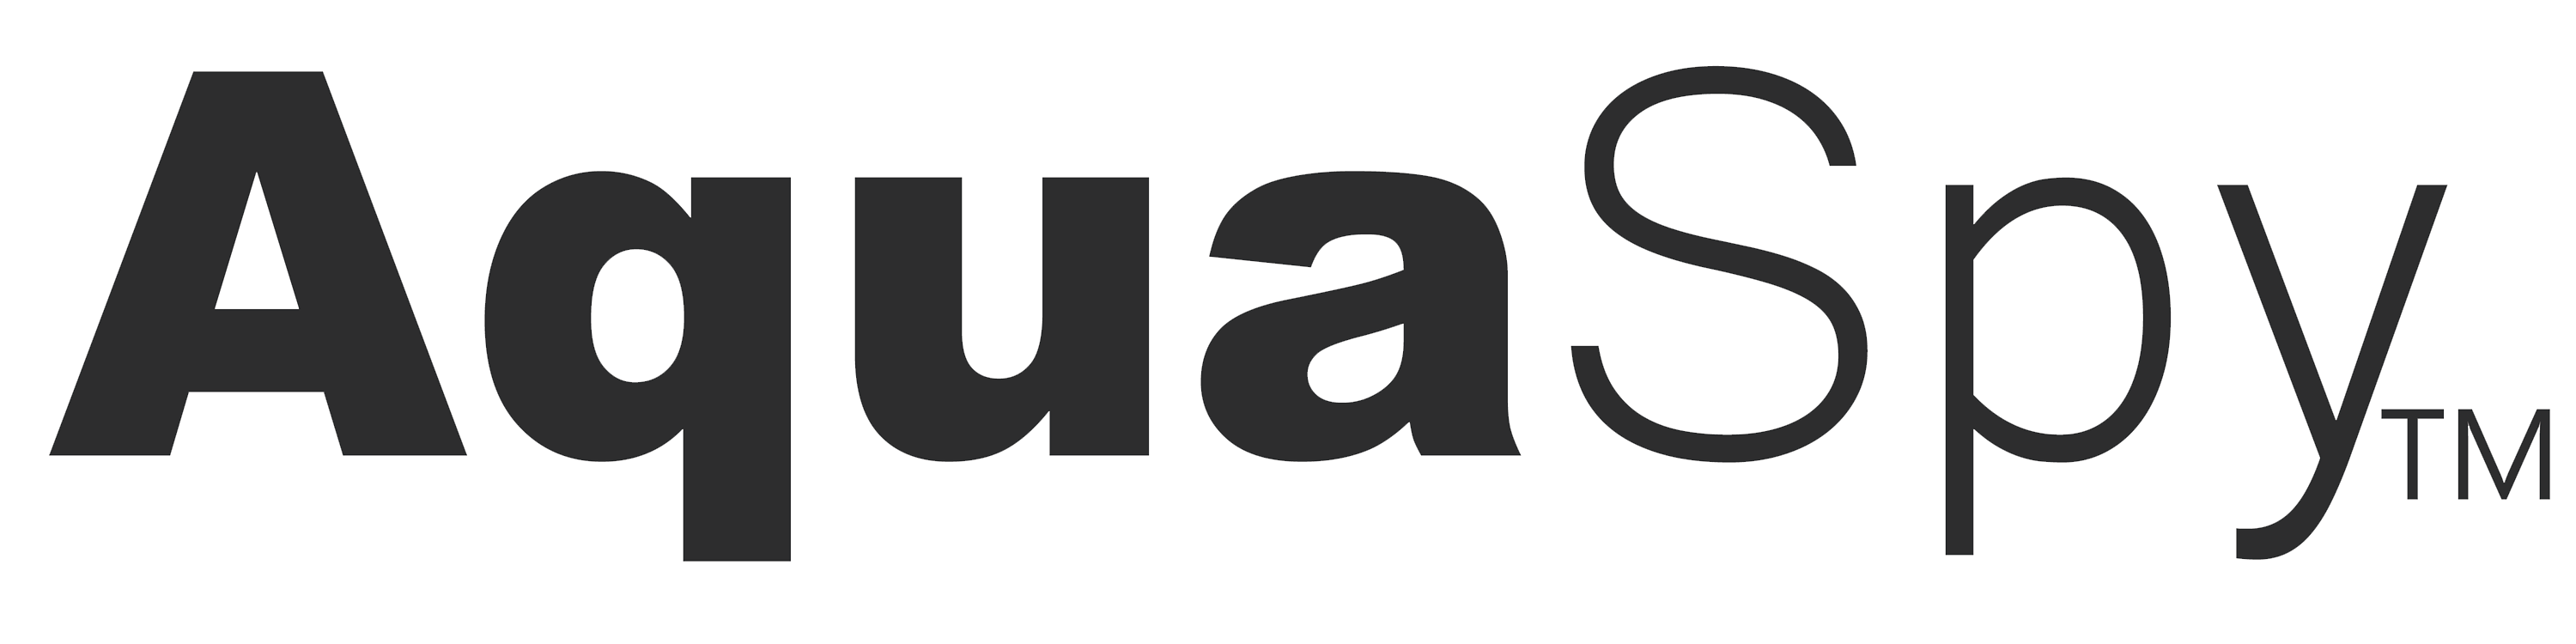 black logo spelling out AquaSpy